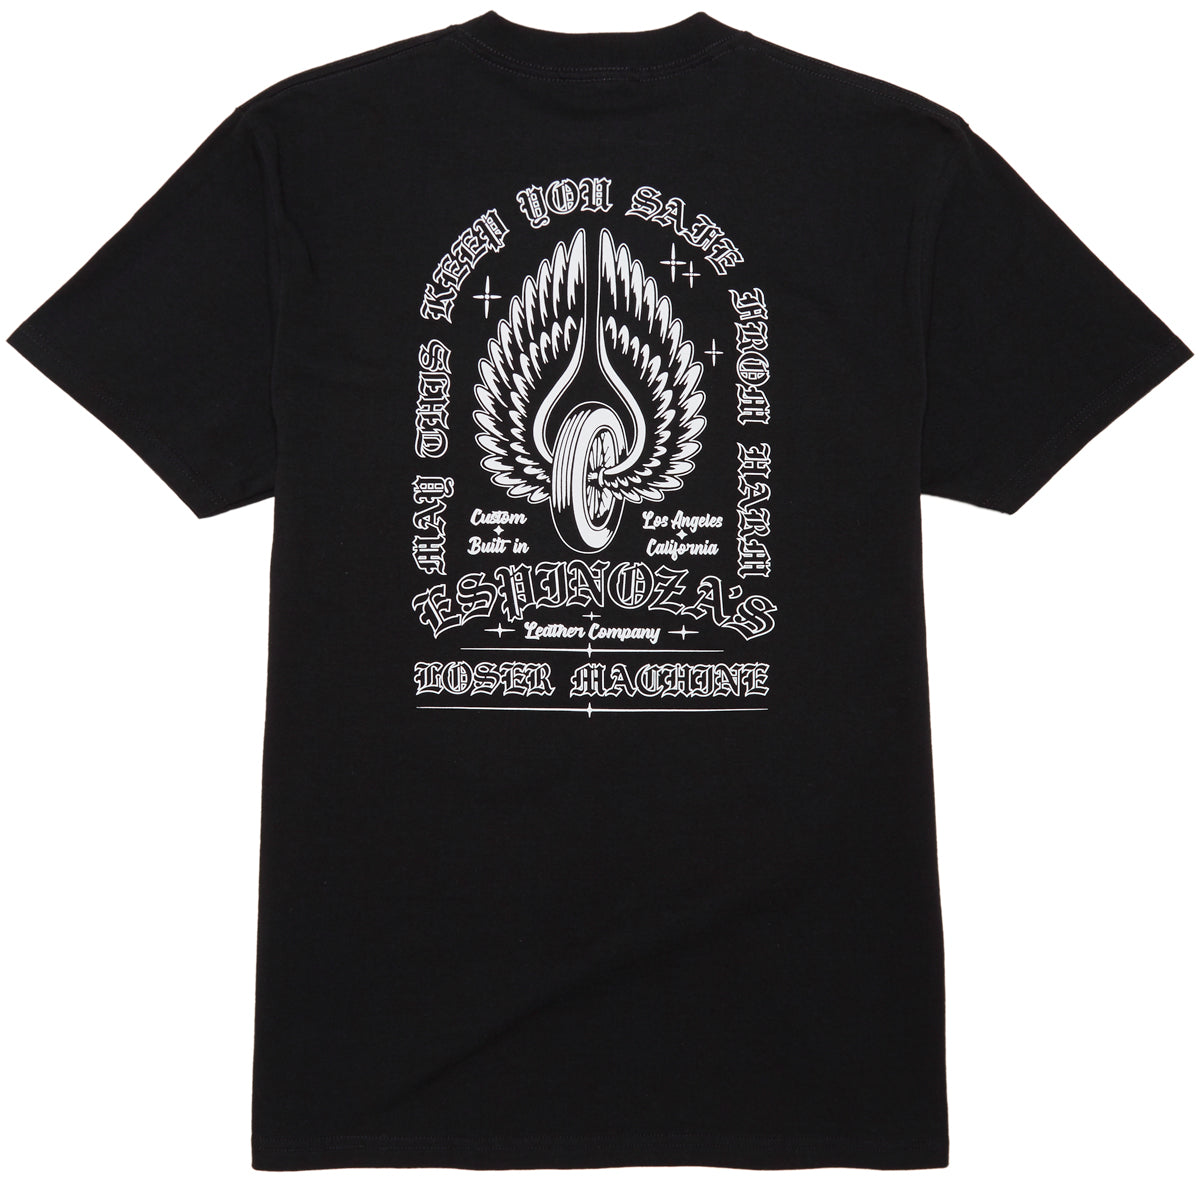 Loser Machine x Espinozas Protected T-Shirt - Black image 1